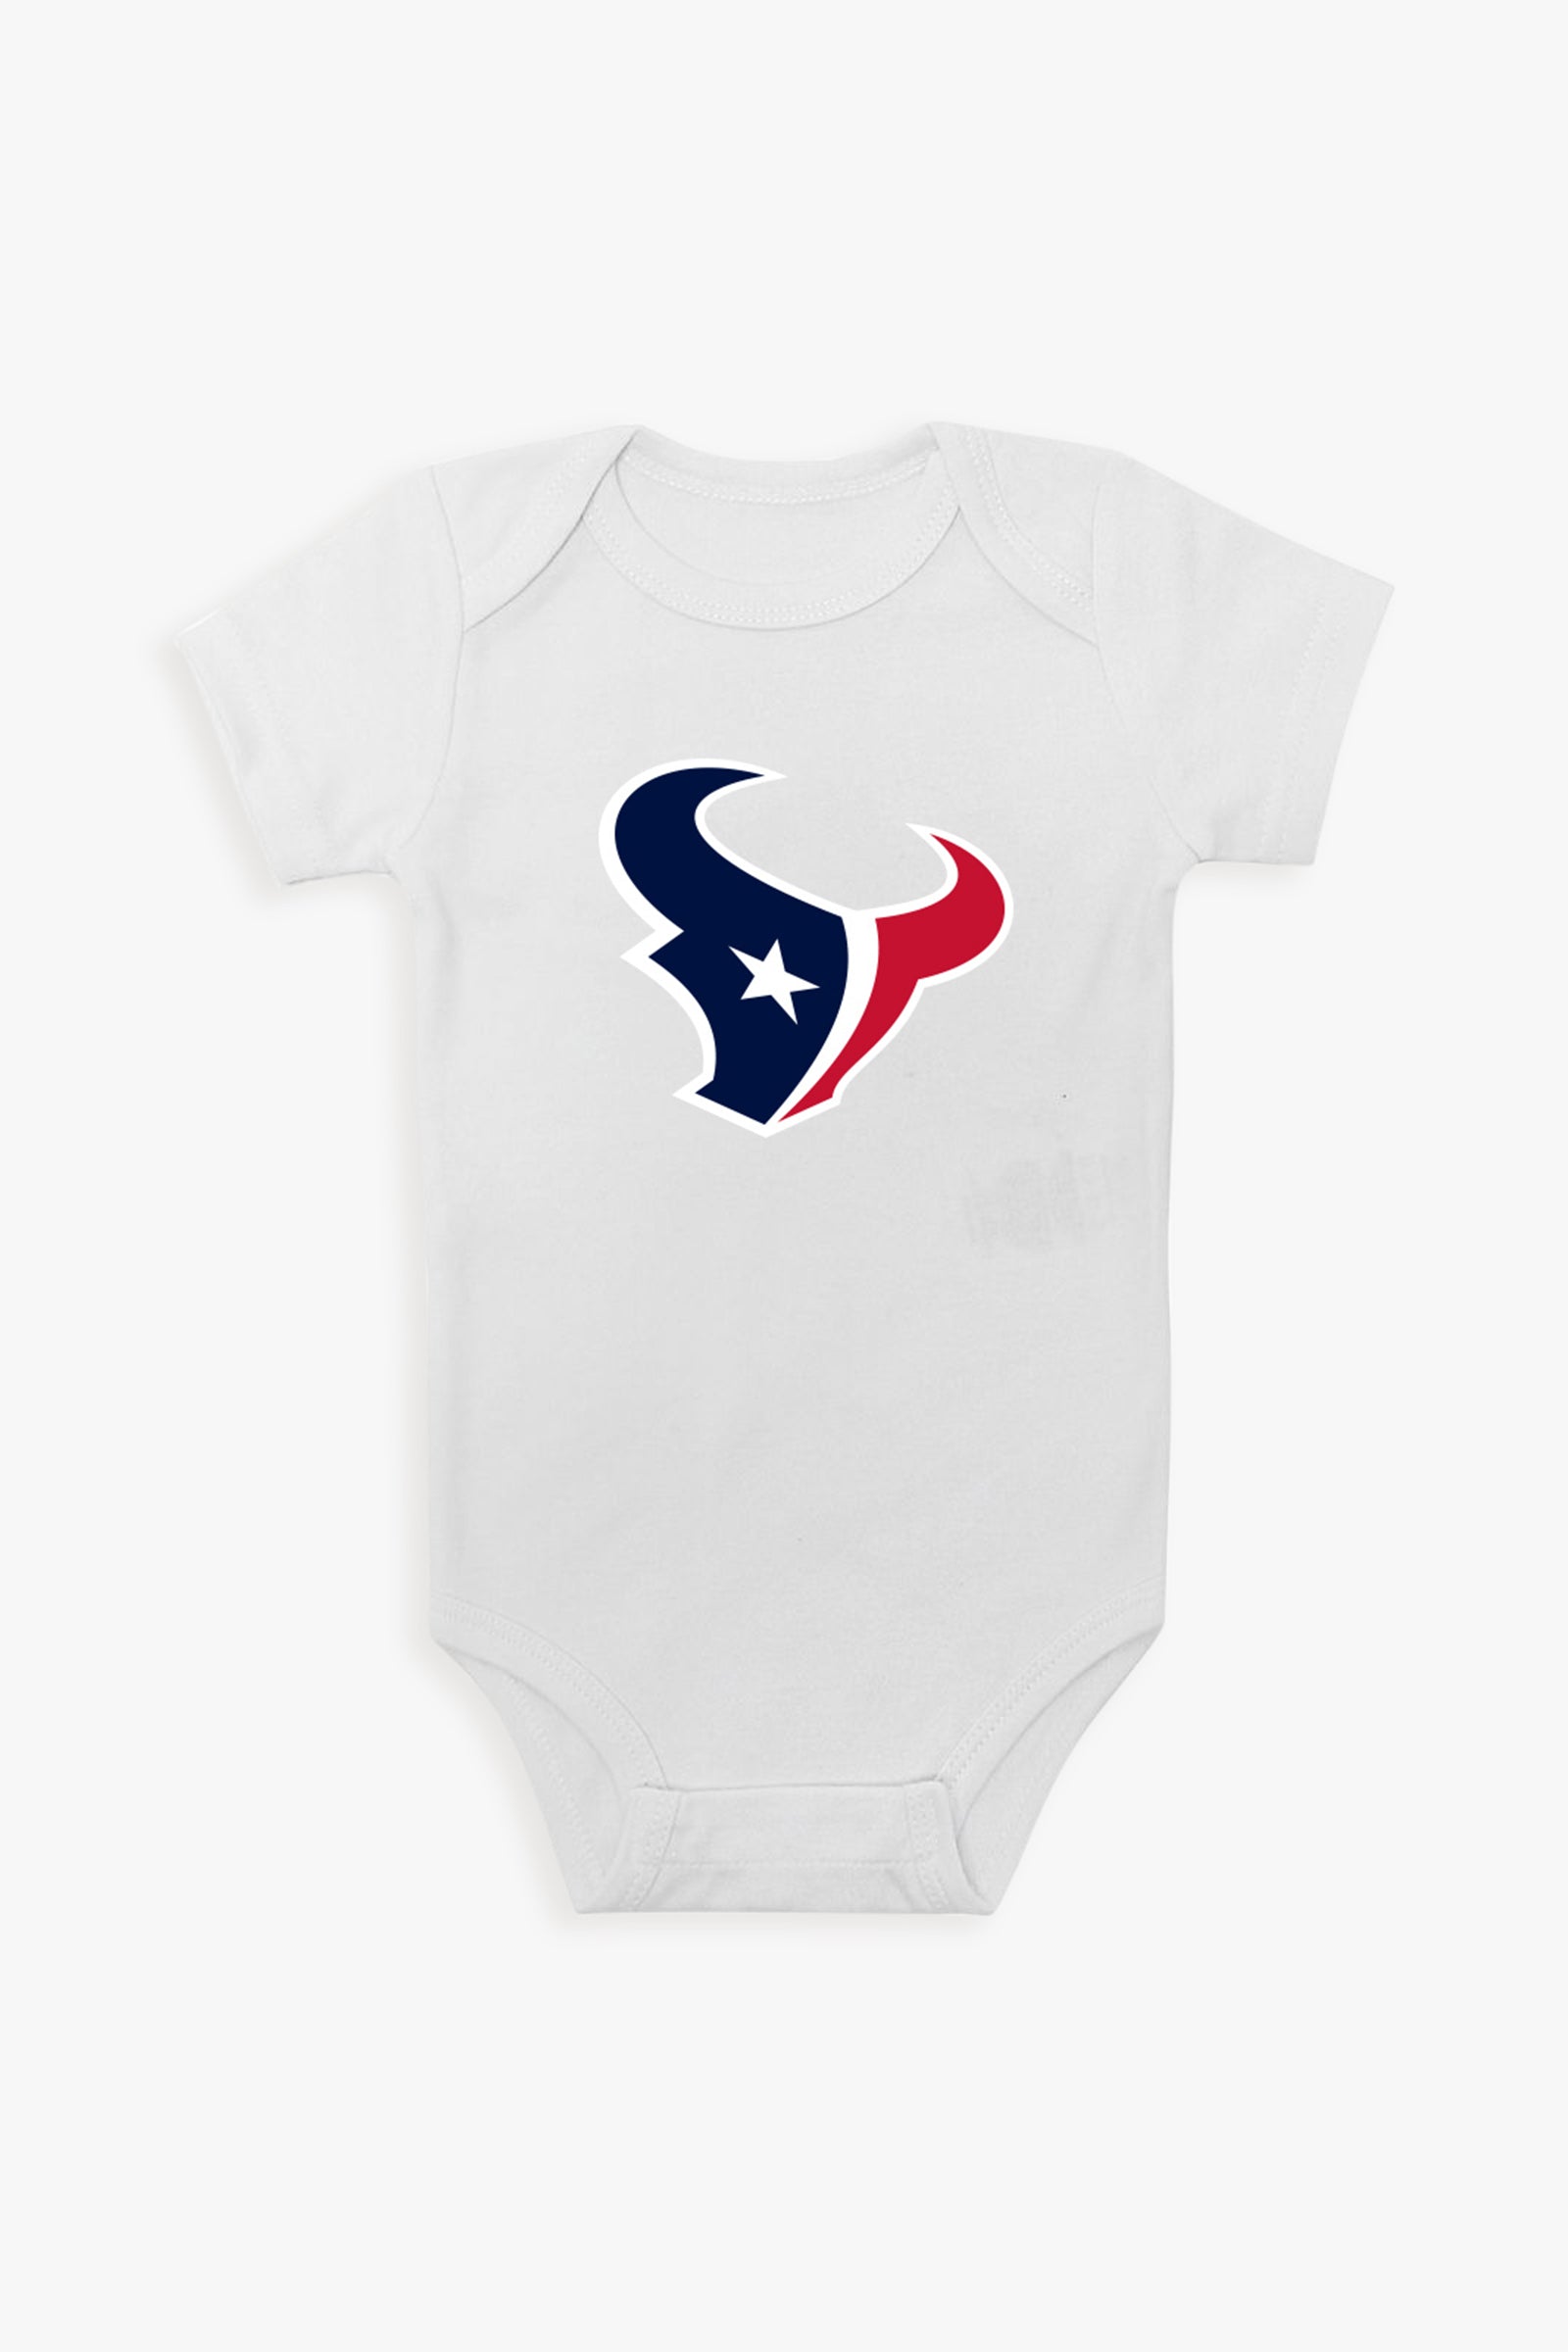 Gertex NFL White Baby Short Sleeve Bodysuit - AFC Division